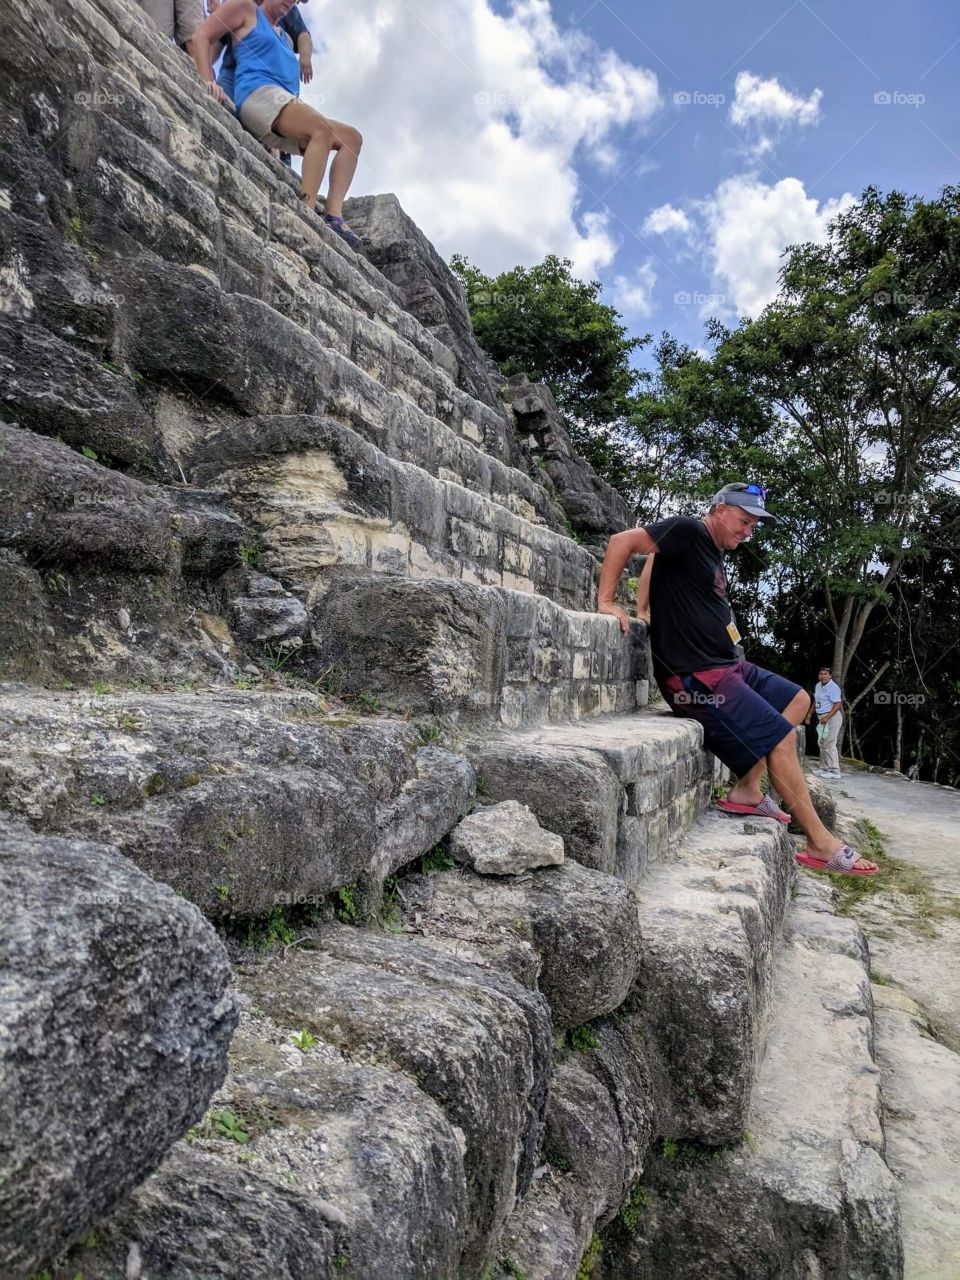 Climbing down carefully at High Temple Mayan ruins, Belize